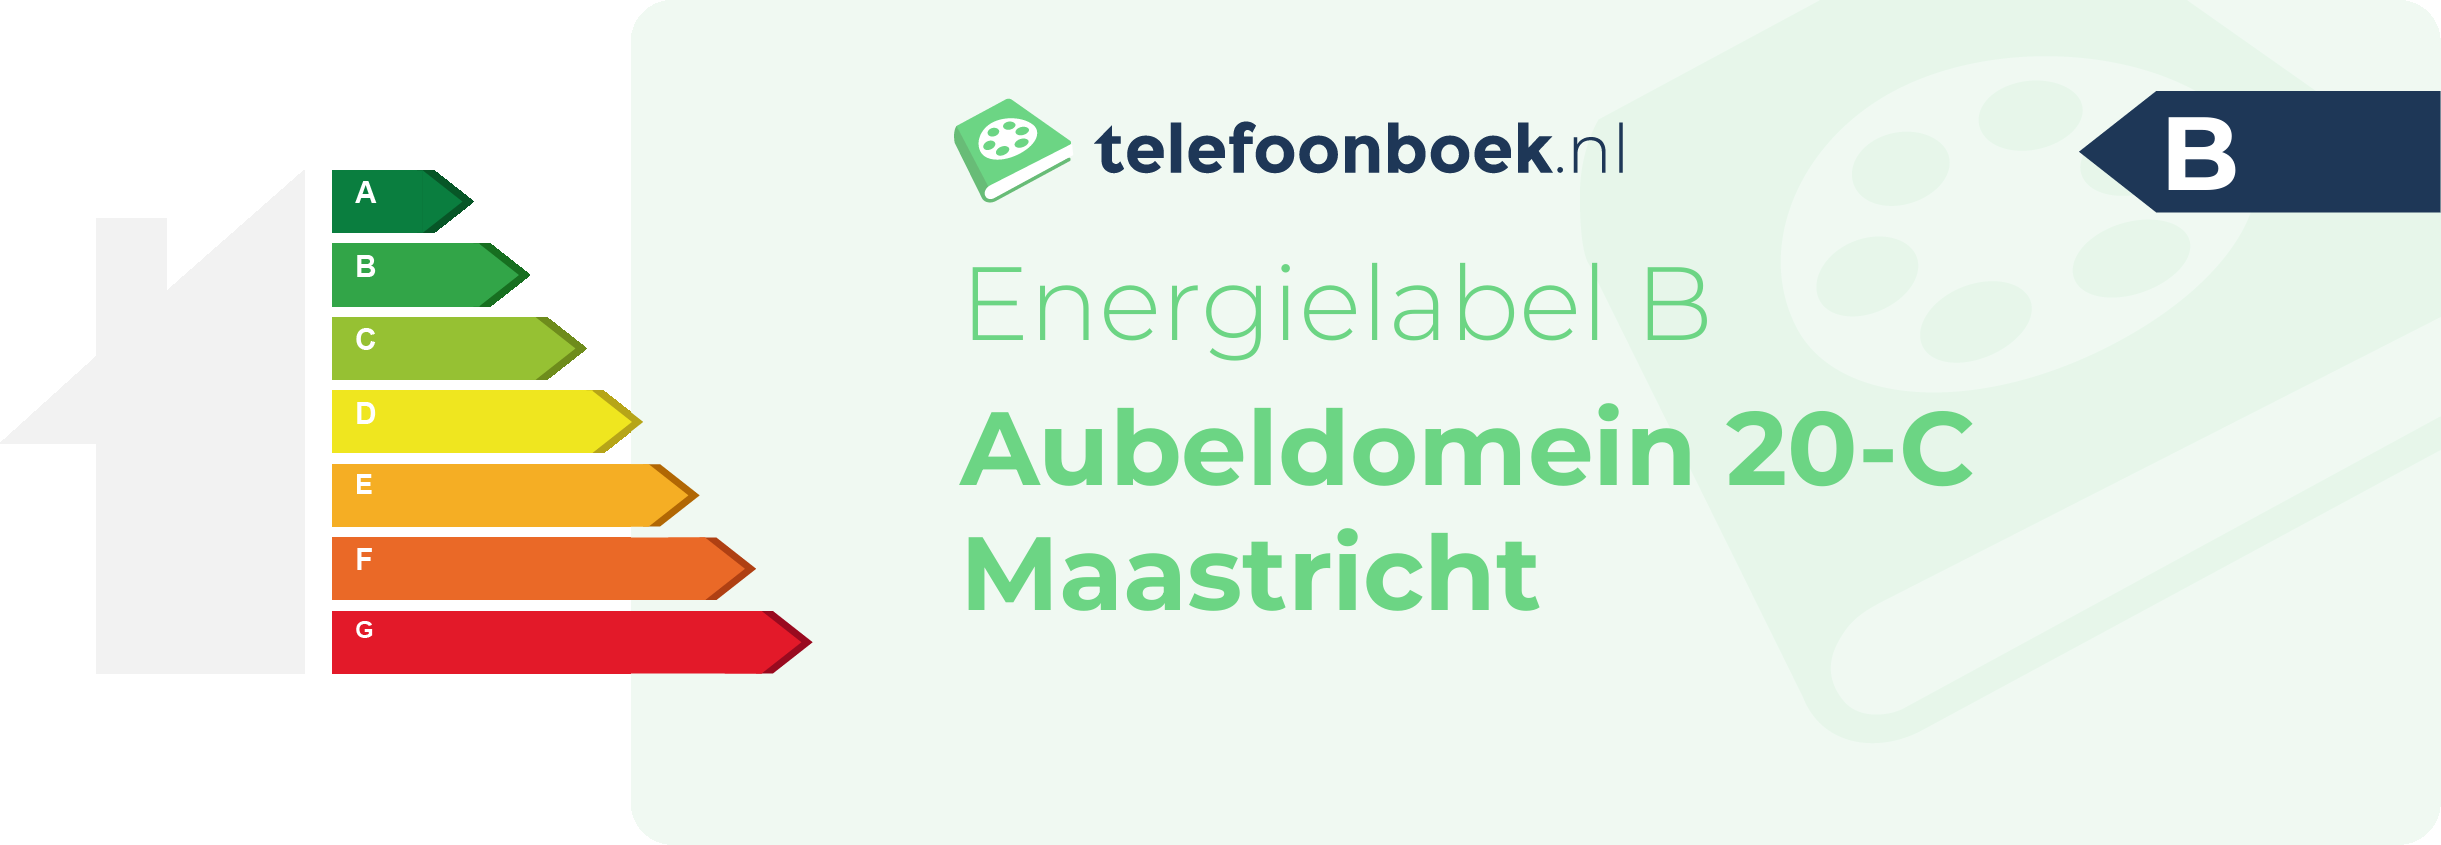 Energielabel Aubeldomein 20-C Maastricht